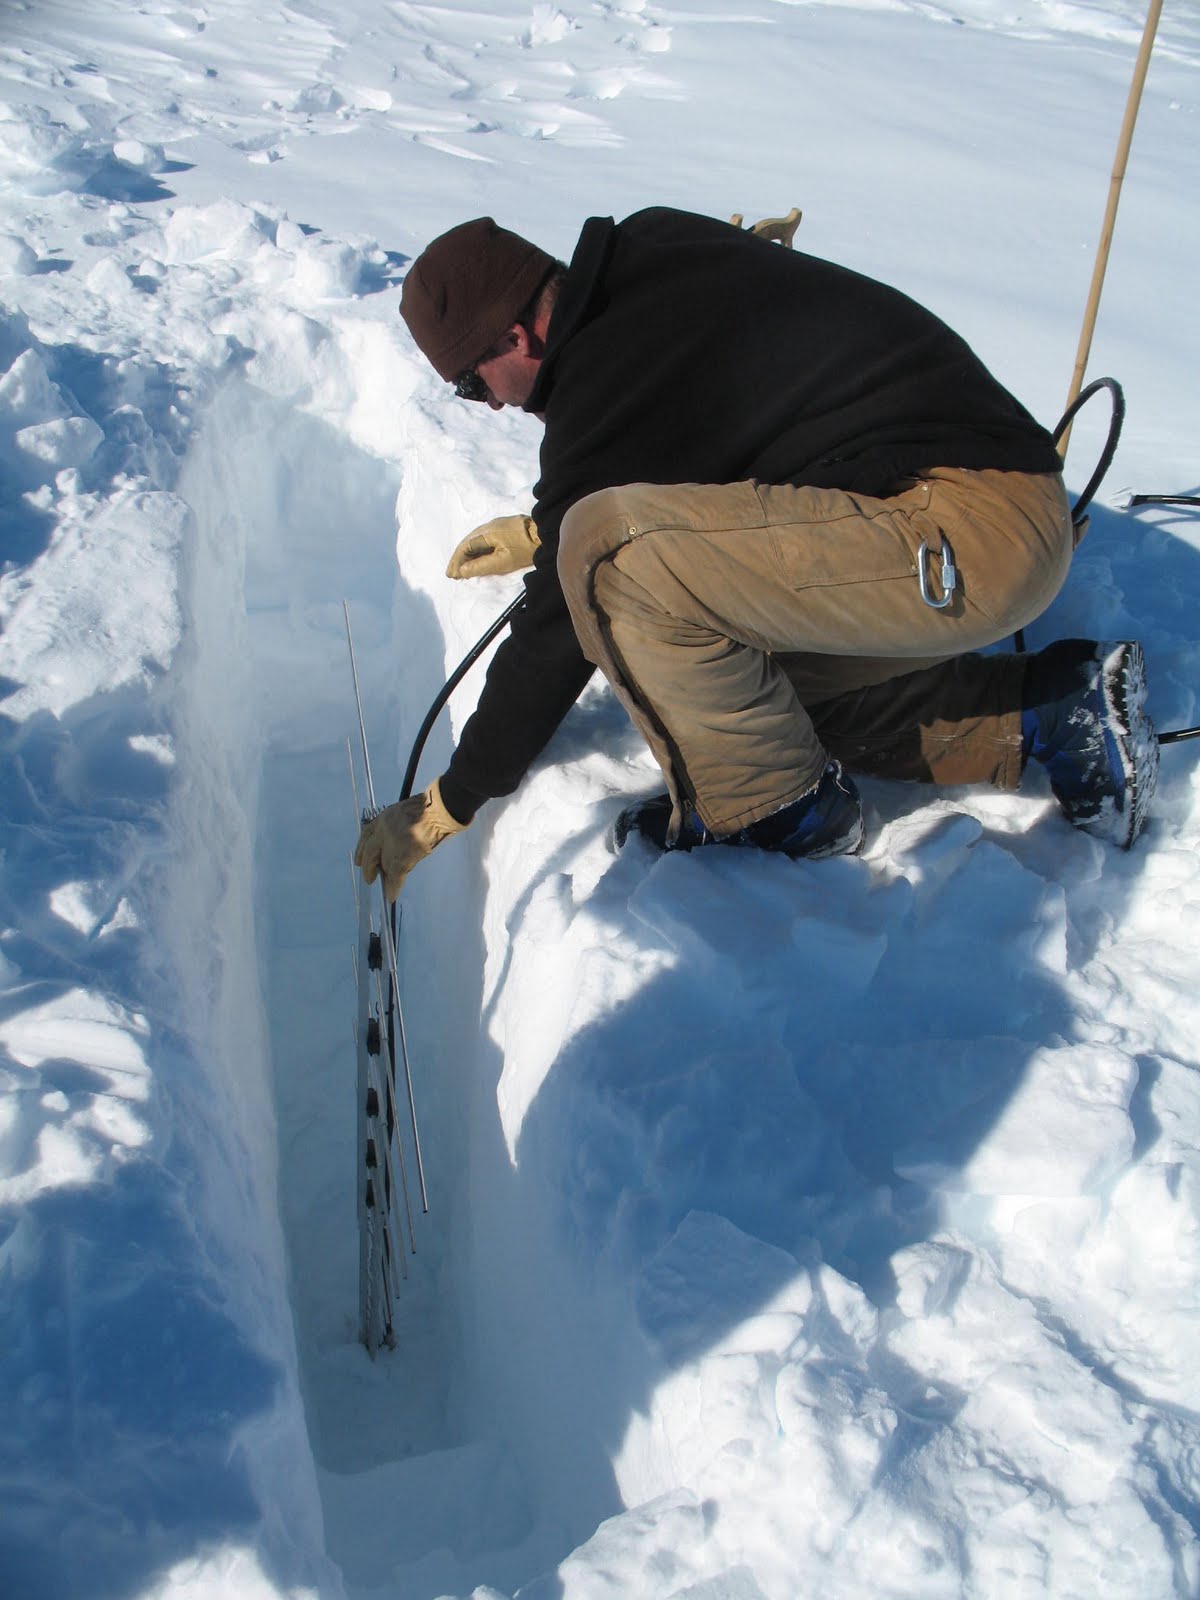 Thorsten Stezelberger buries a radio antenna six feet deep in the snow. 